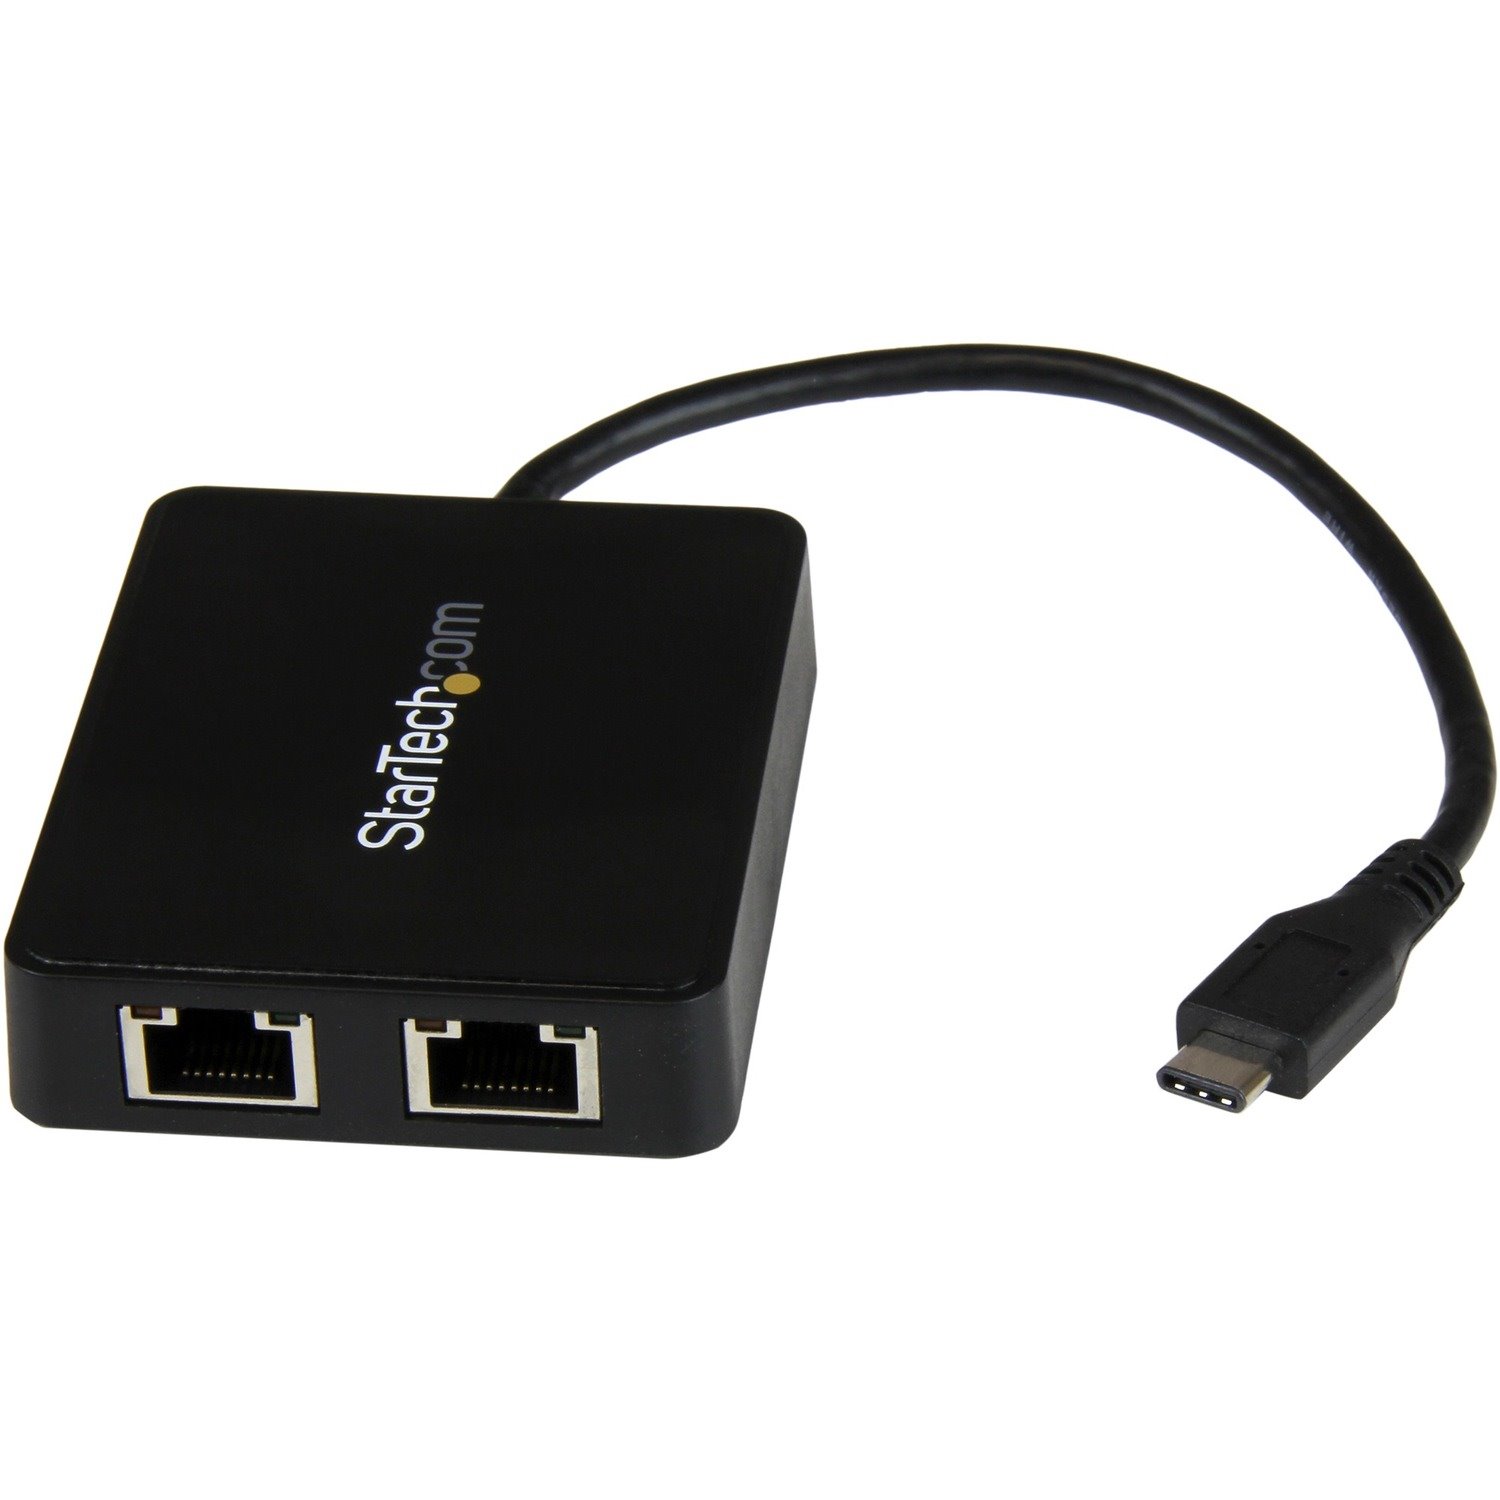 StarTech.com Gigabit Ethernet Adapter for Computer/Notebook - 10/100/1000Base-T - Desktop